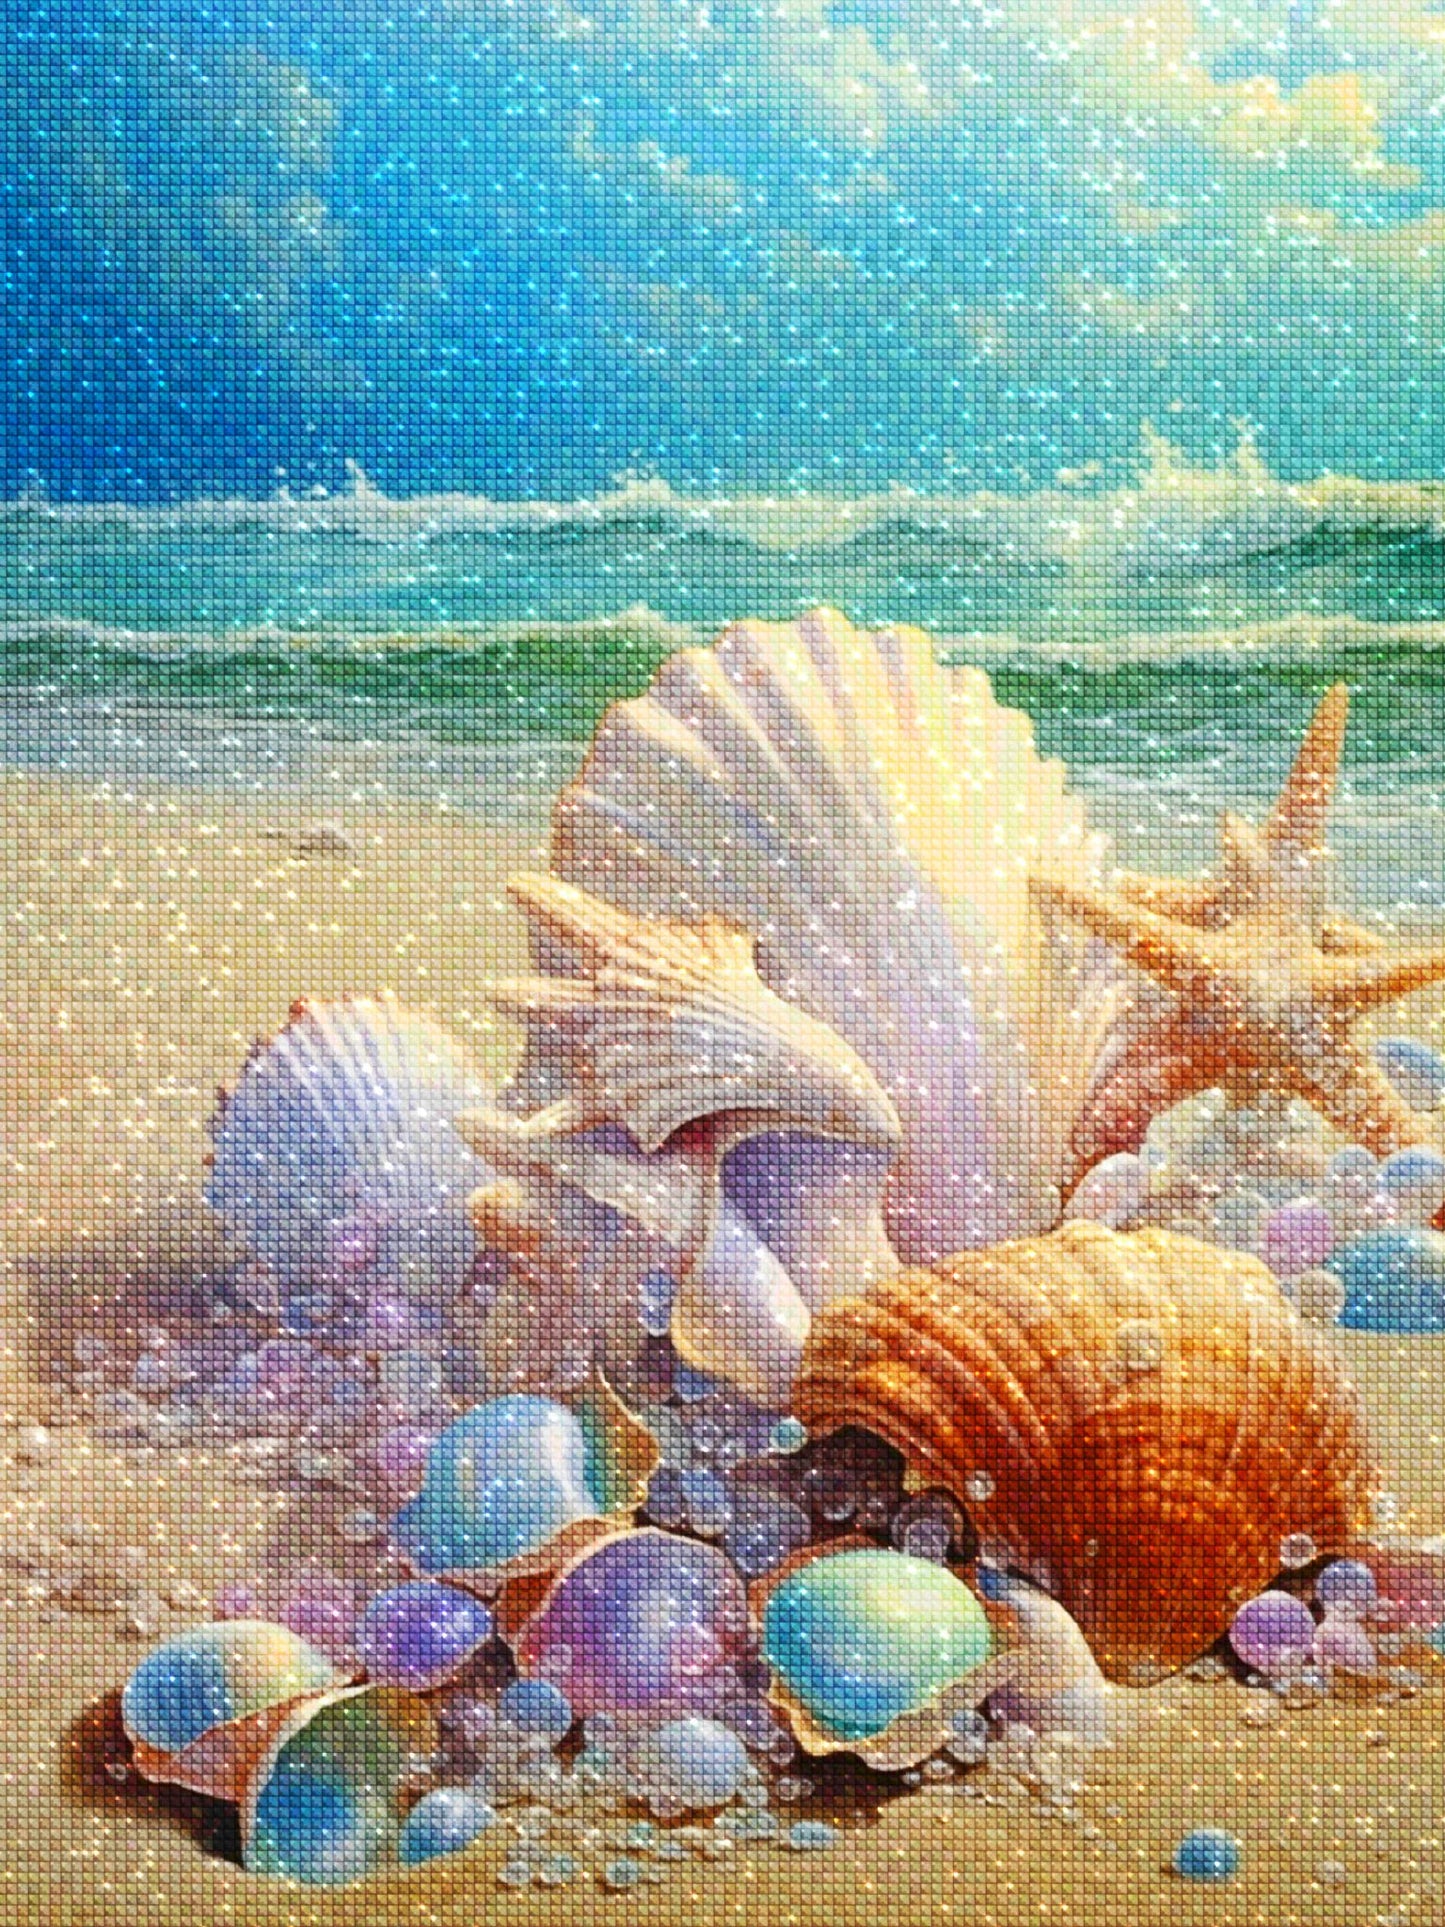 Seashells by the Seashore - Diamond Painting Kit - Artslo.com